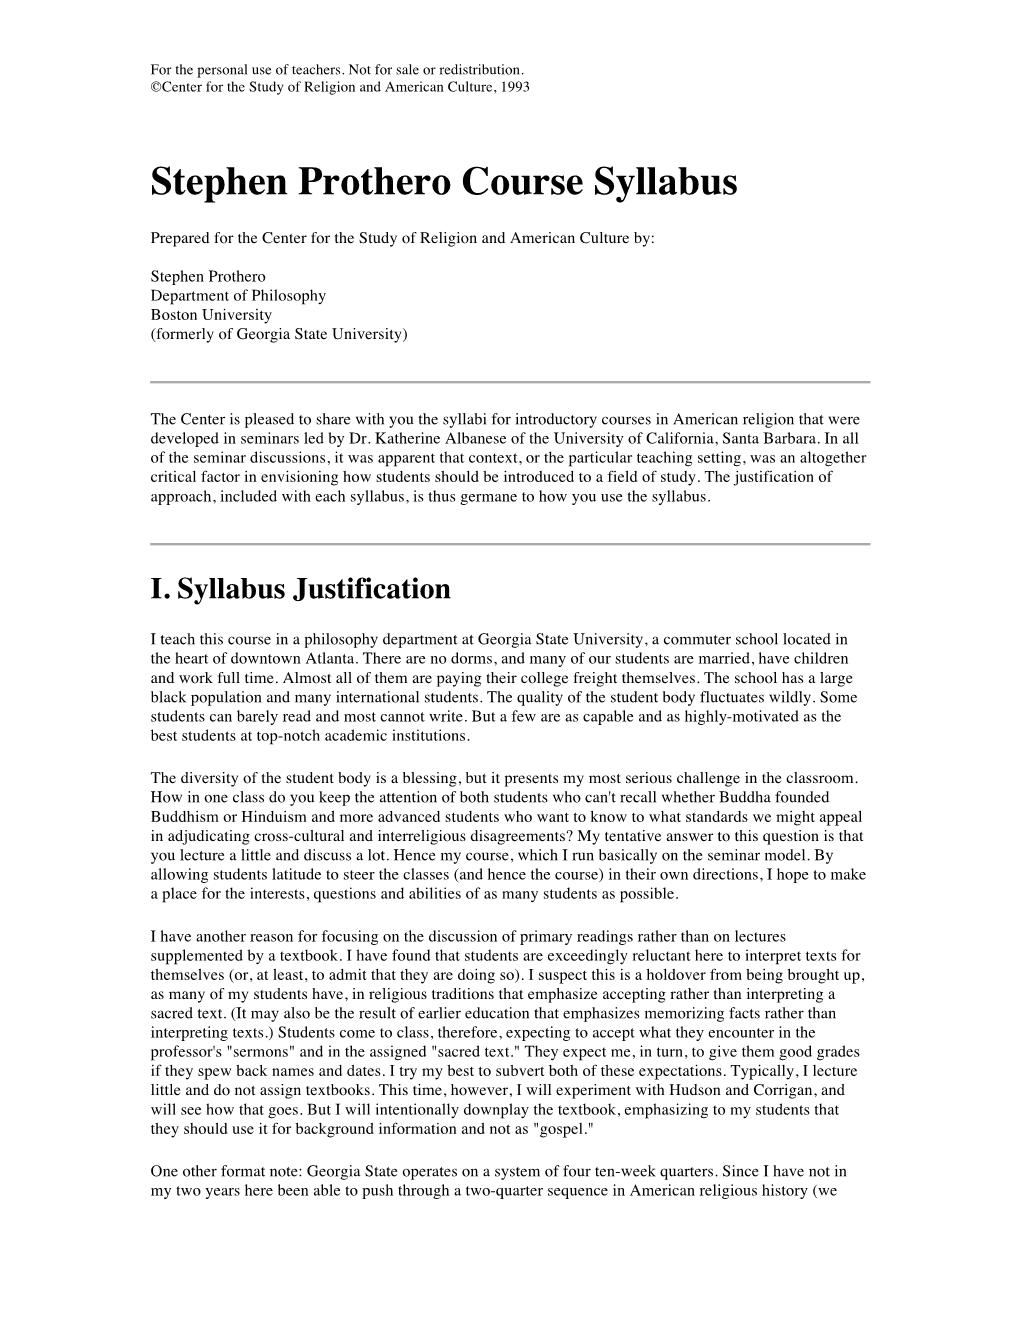 Stephen Prothero Course Syllabus